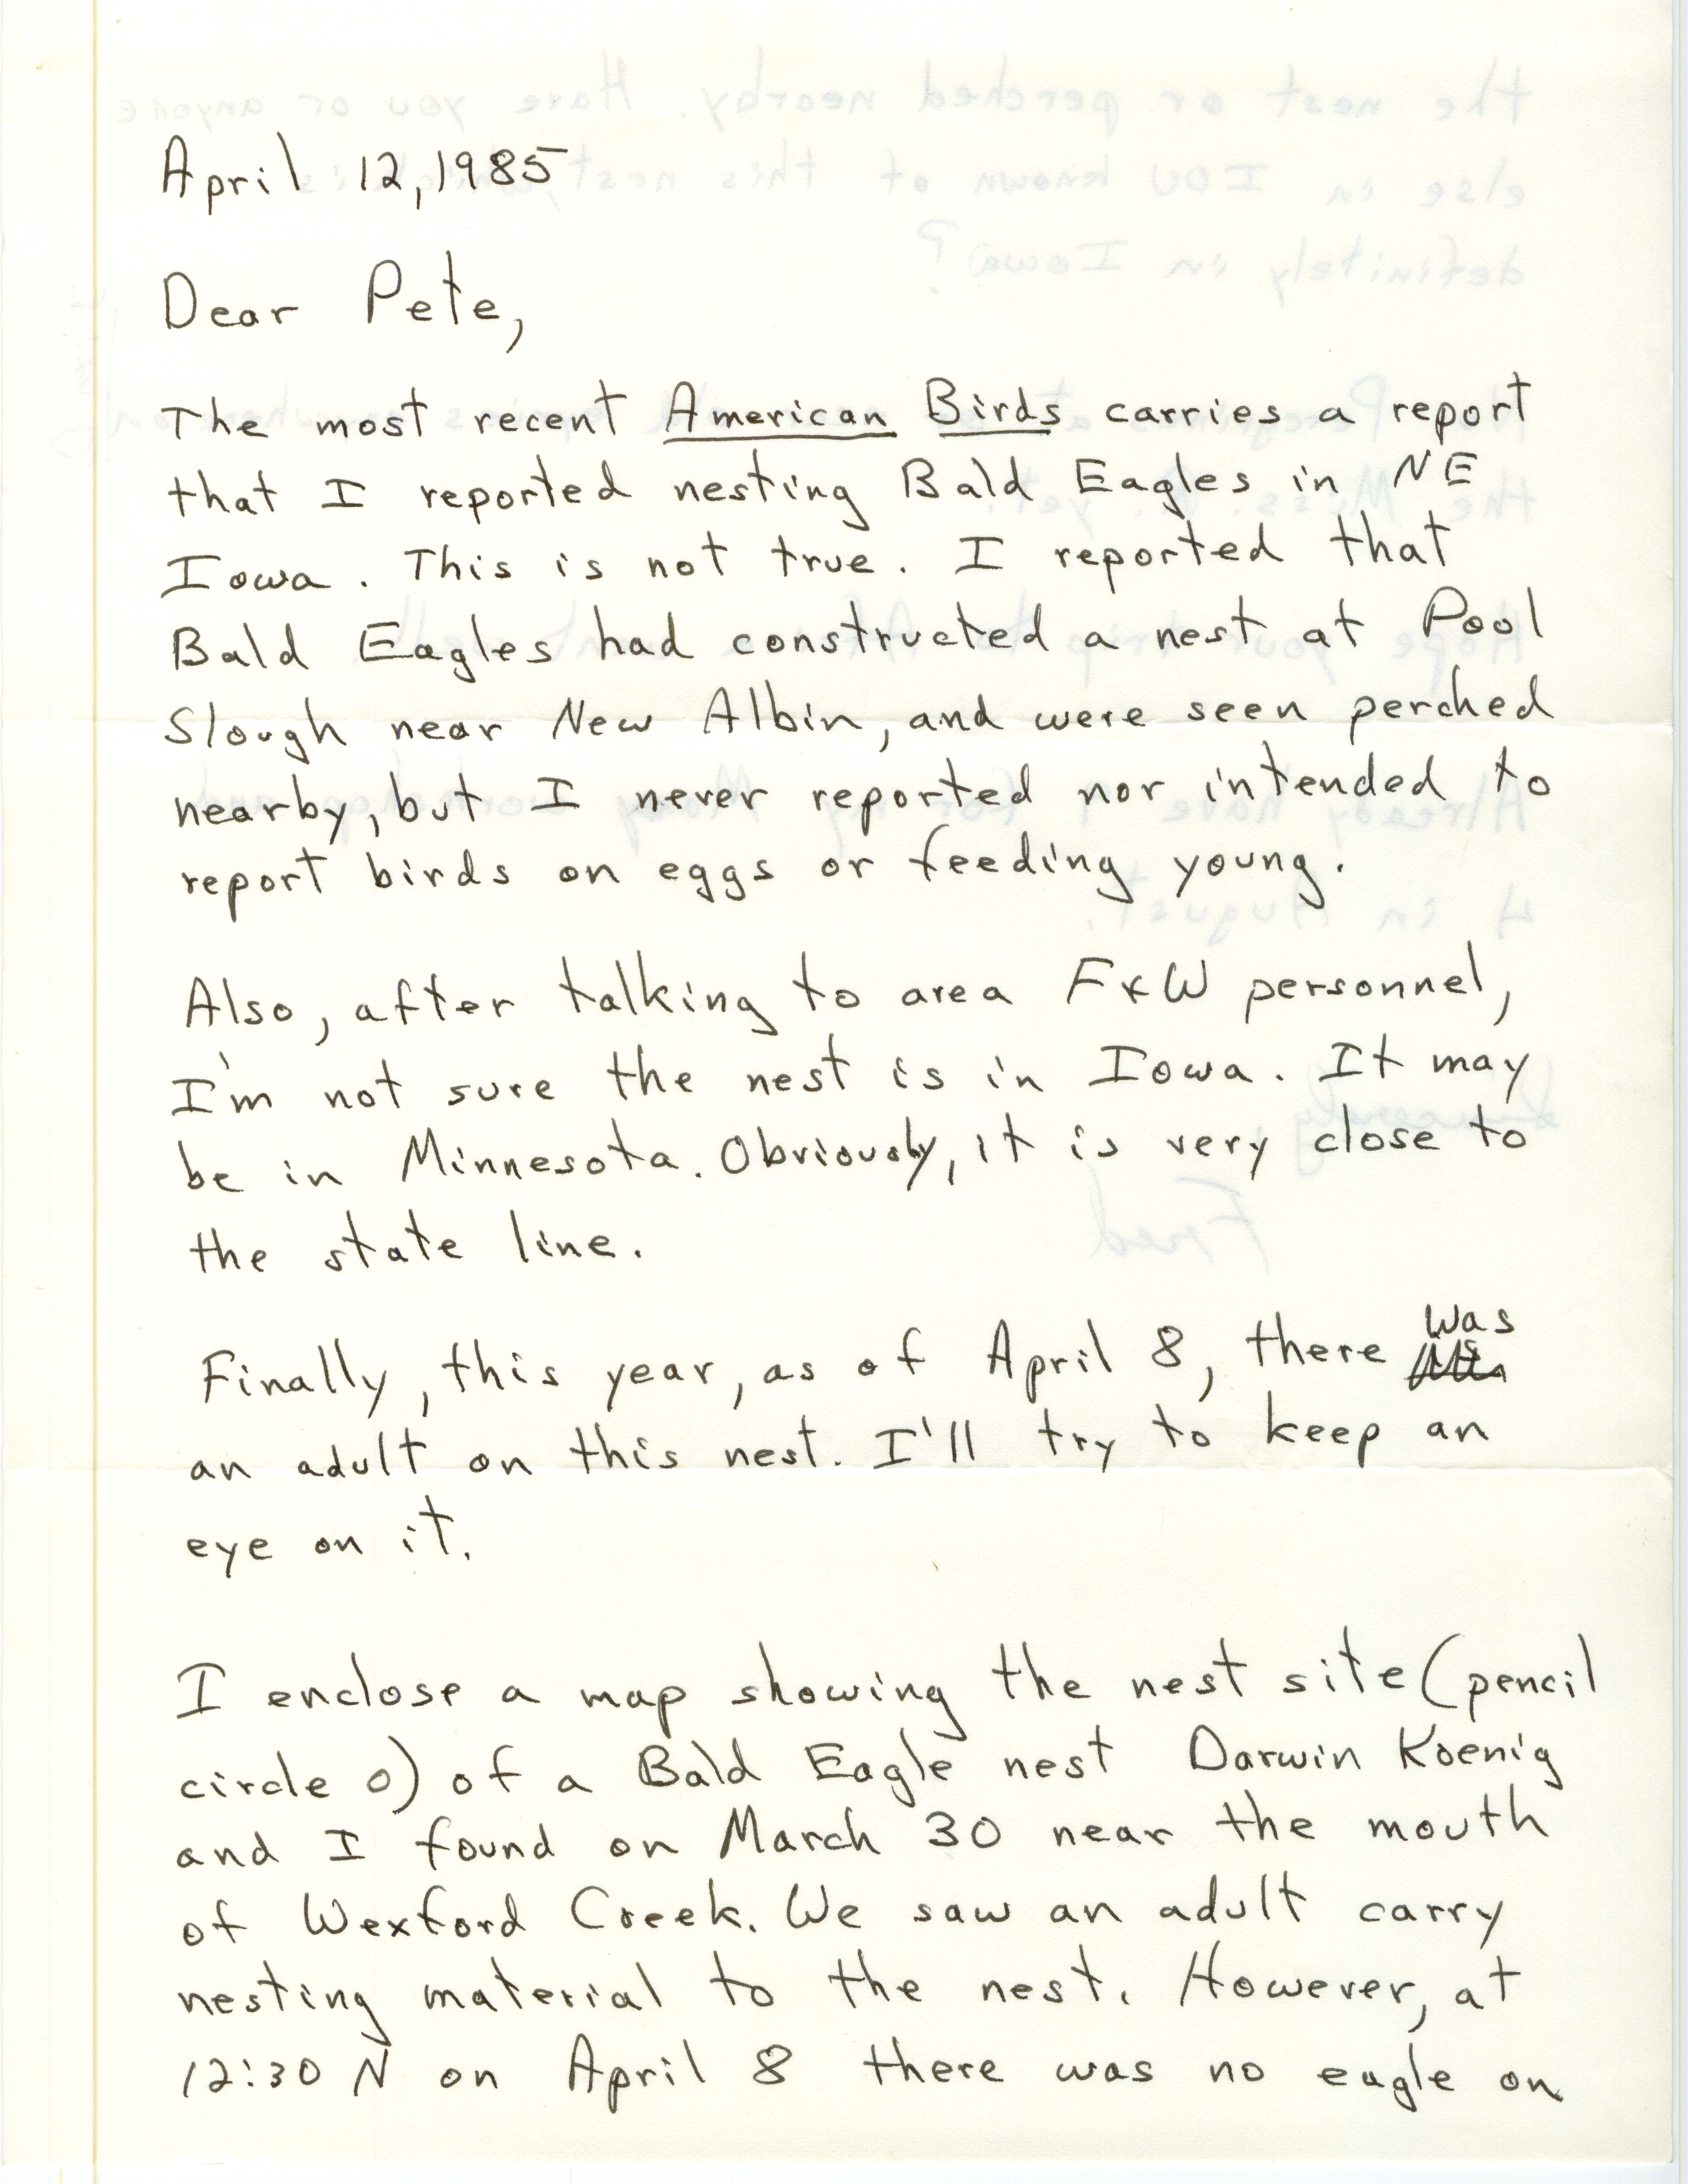 Fred Lesher letter to Peter C. Petersen regarding Bald Eagle nests, April 12, 1985